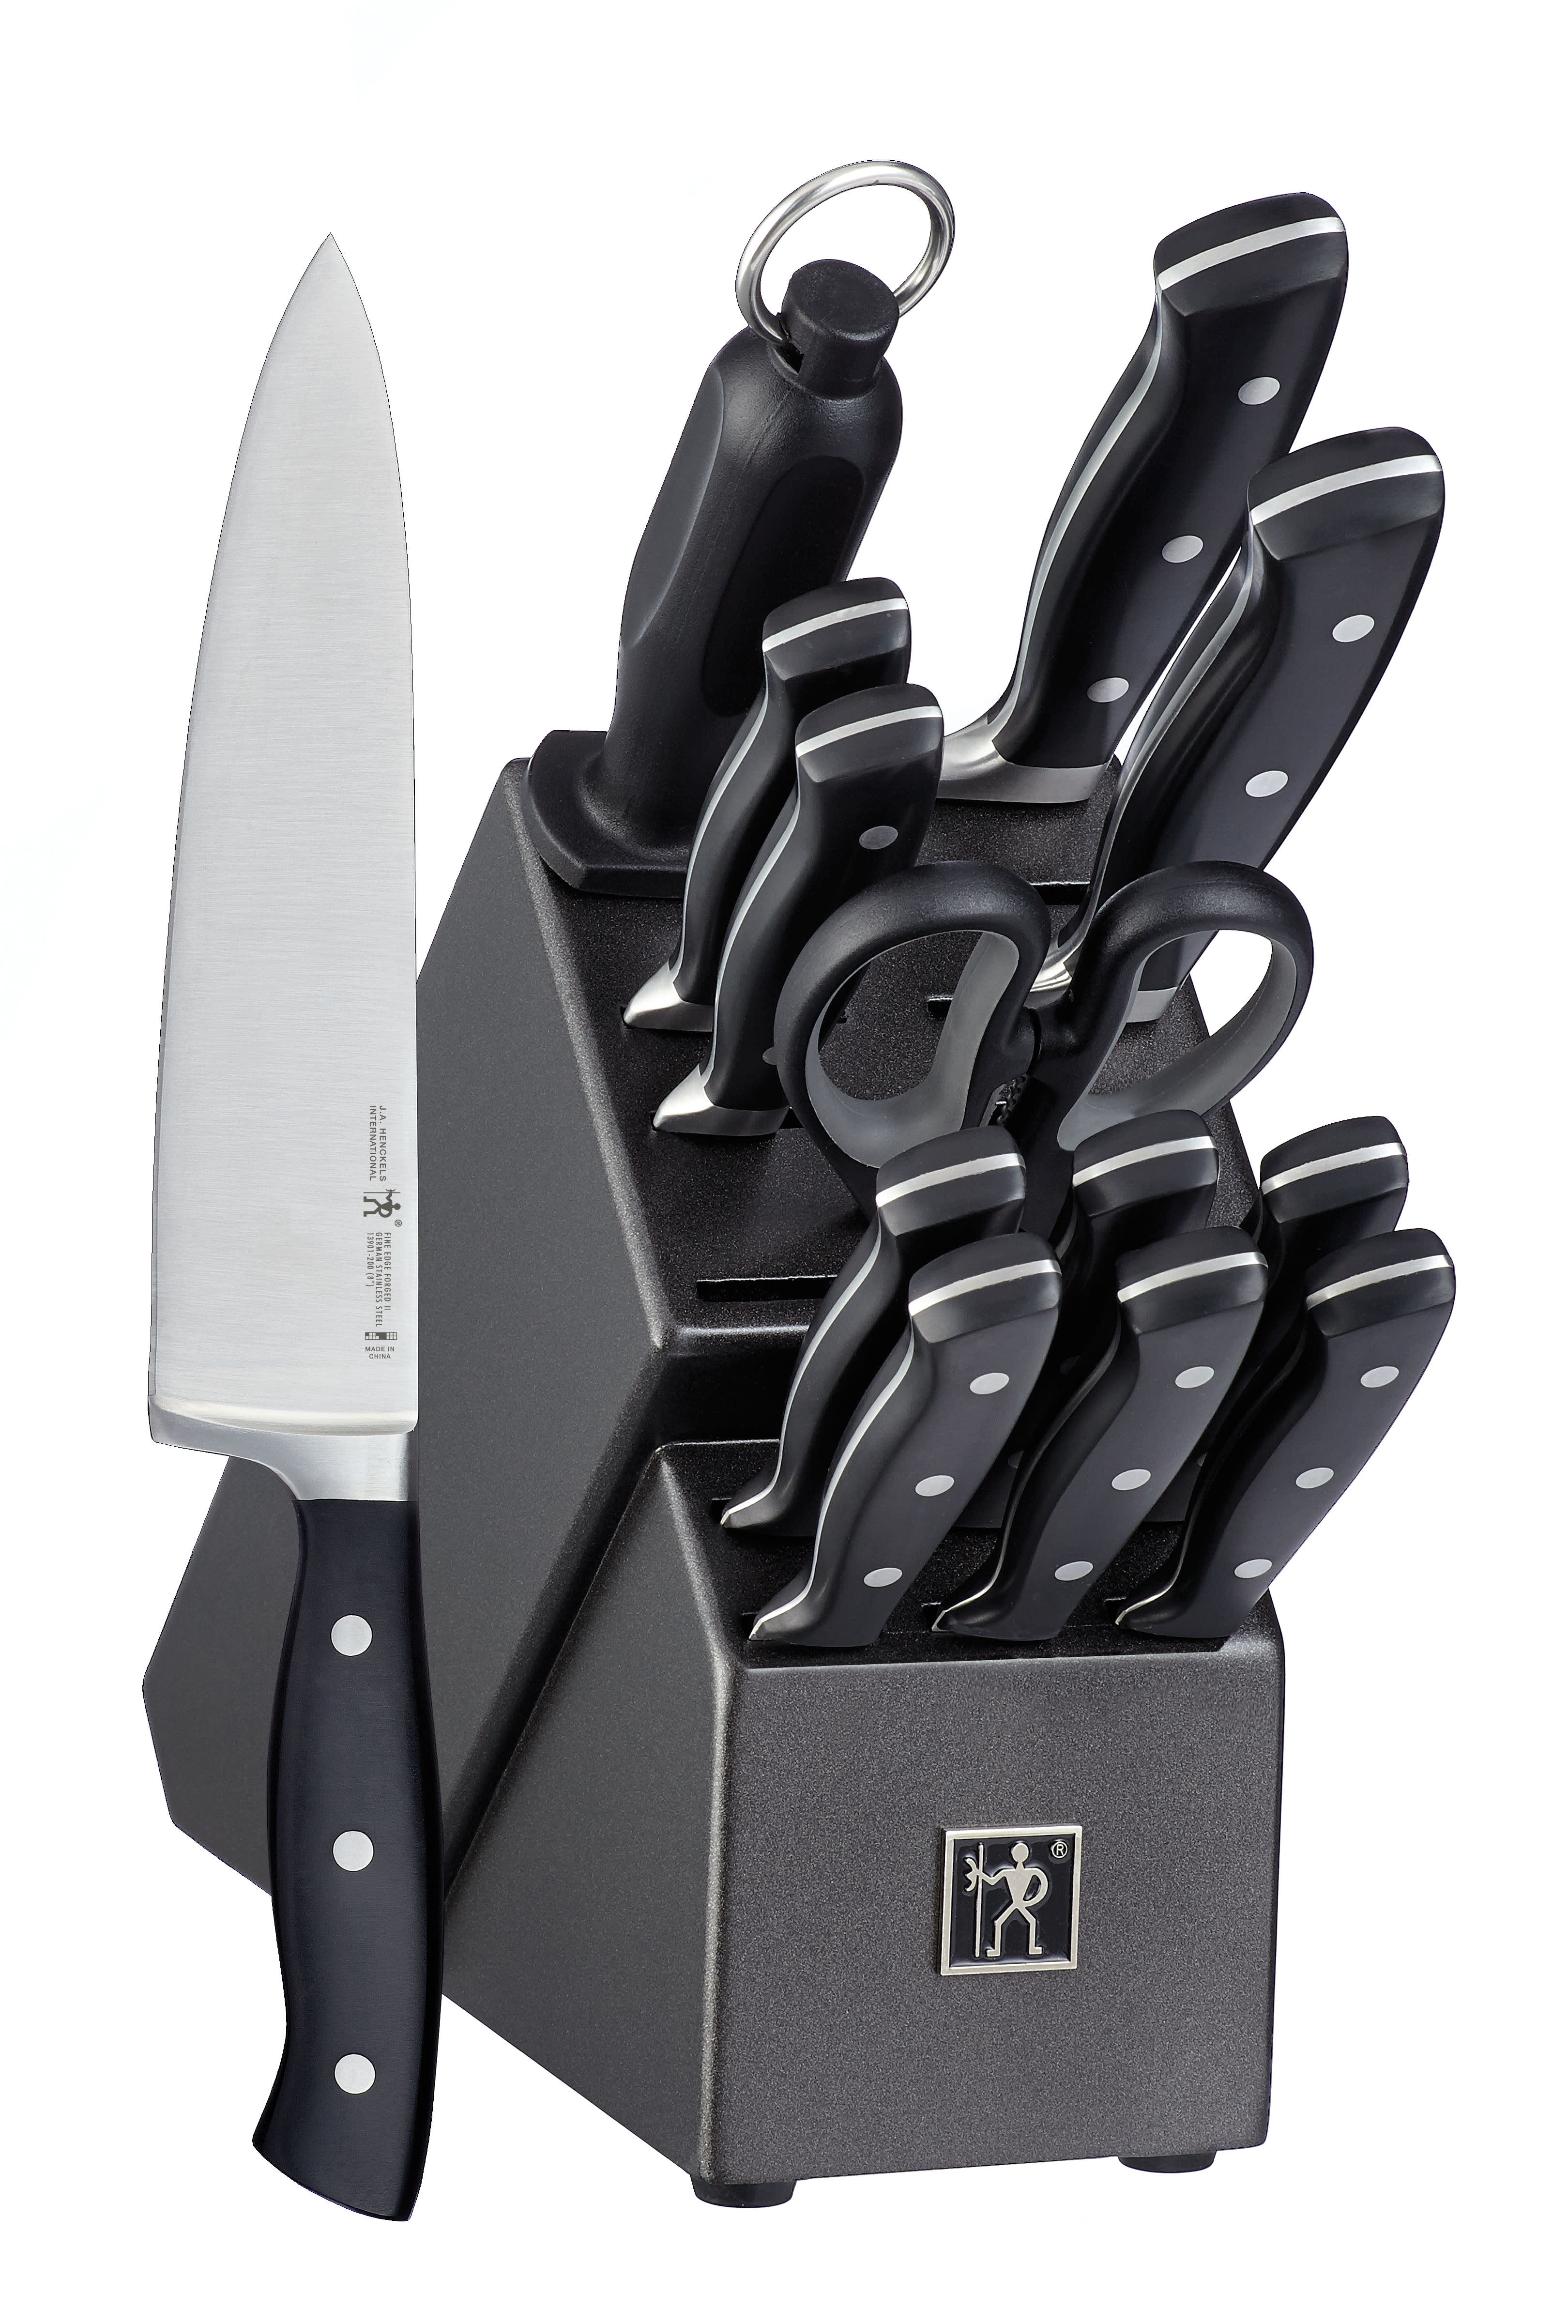 Henckels® Fine Edge Forged 14 Piece Knife Block Set